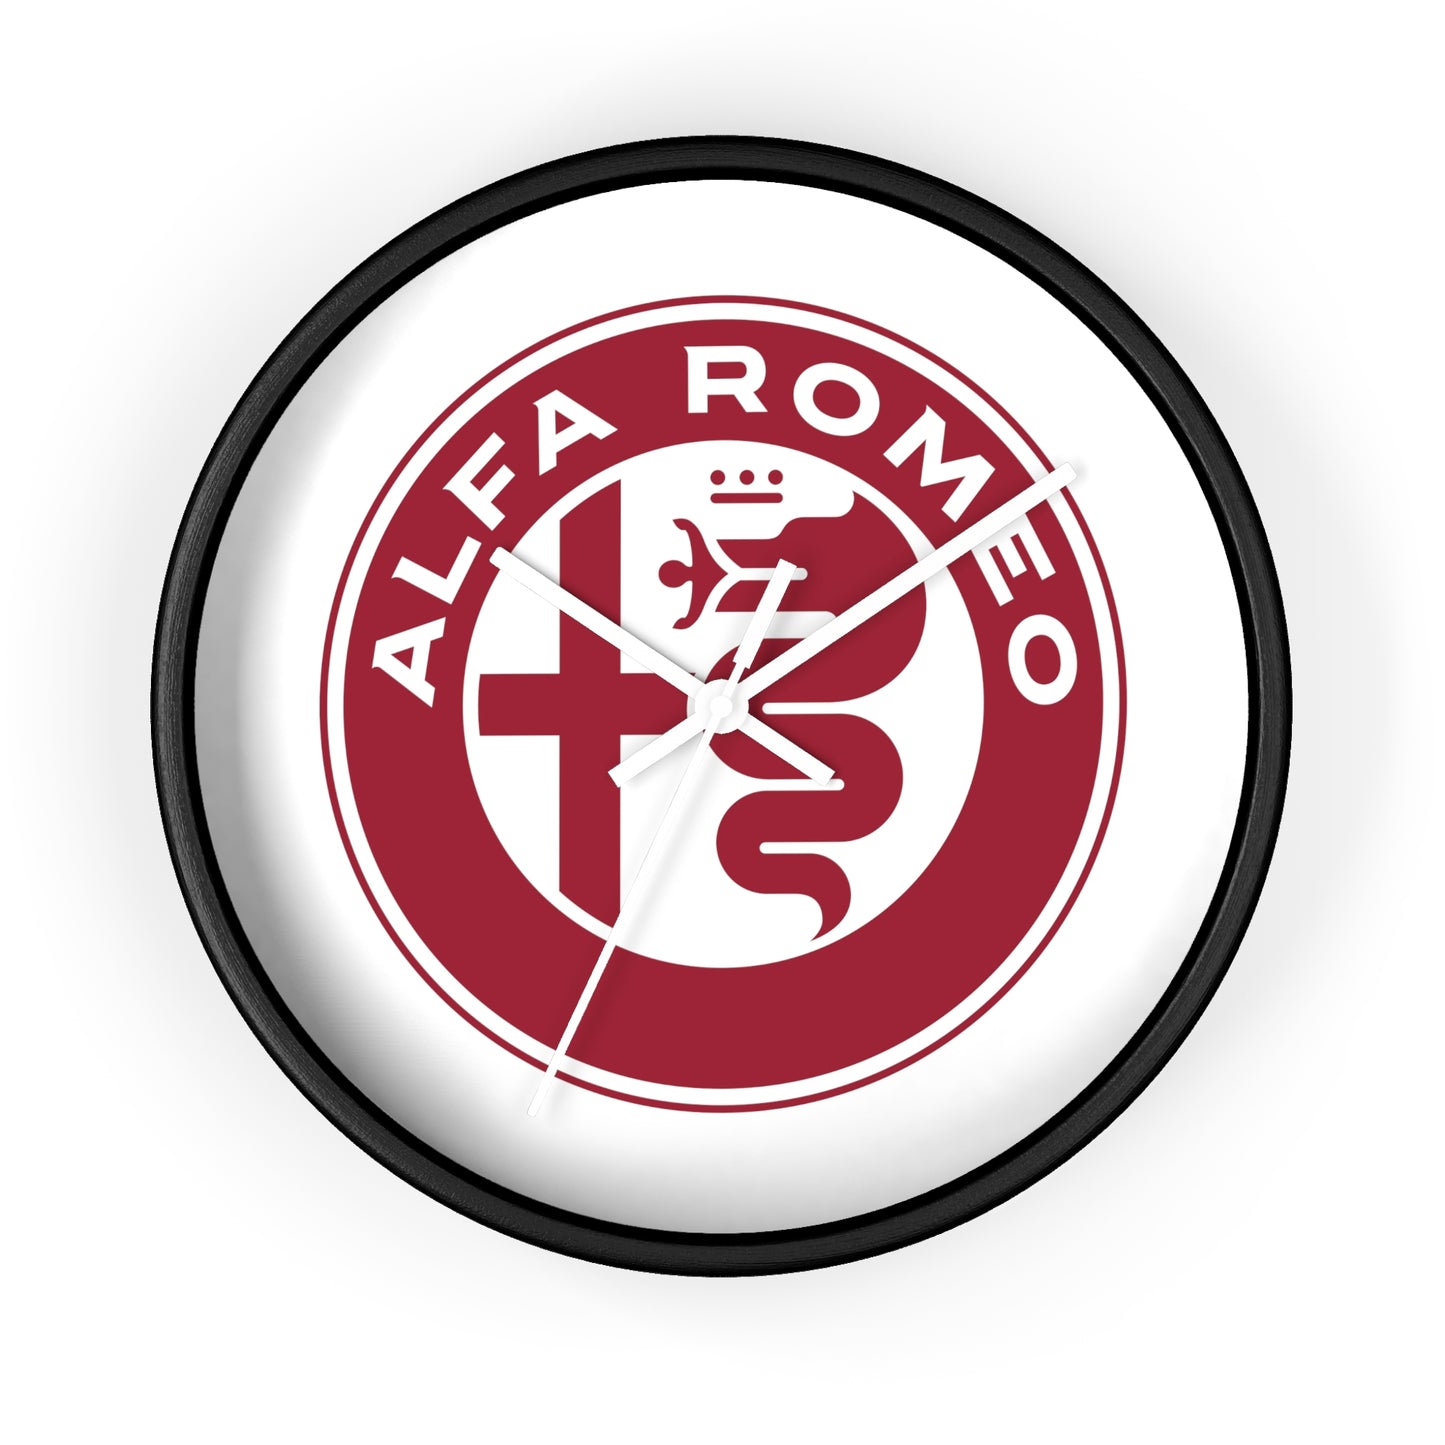 Alfa Romeo New Emblem Design in Rosso Wall Clock - Black and White Frames, Vibrant Design